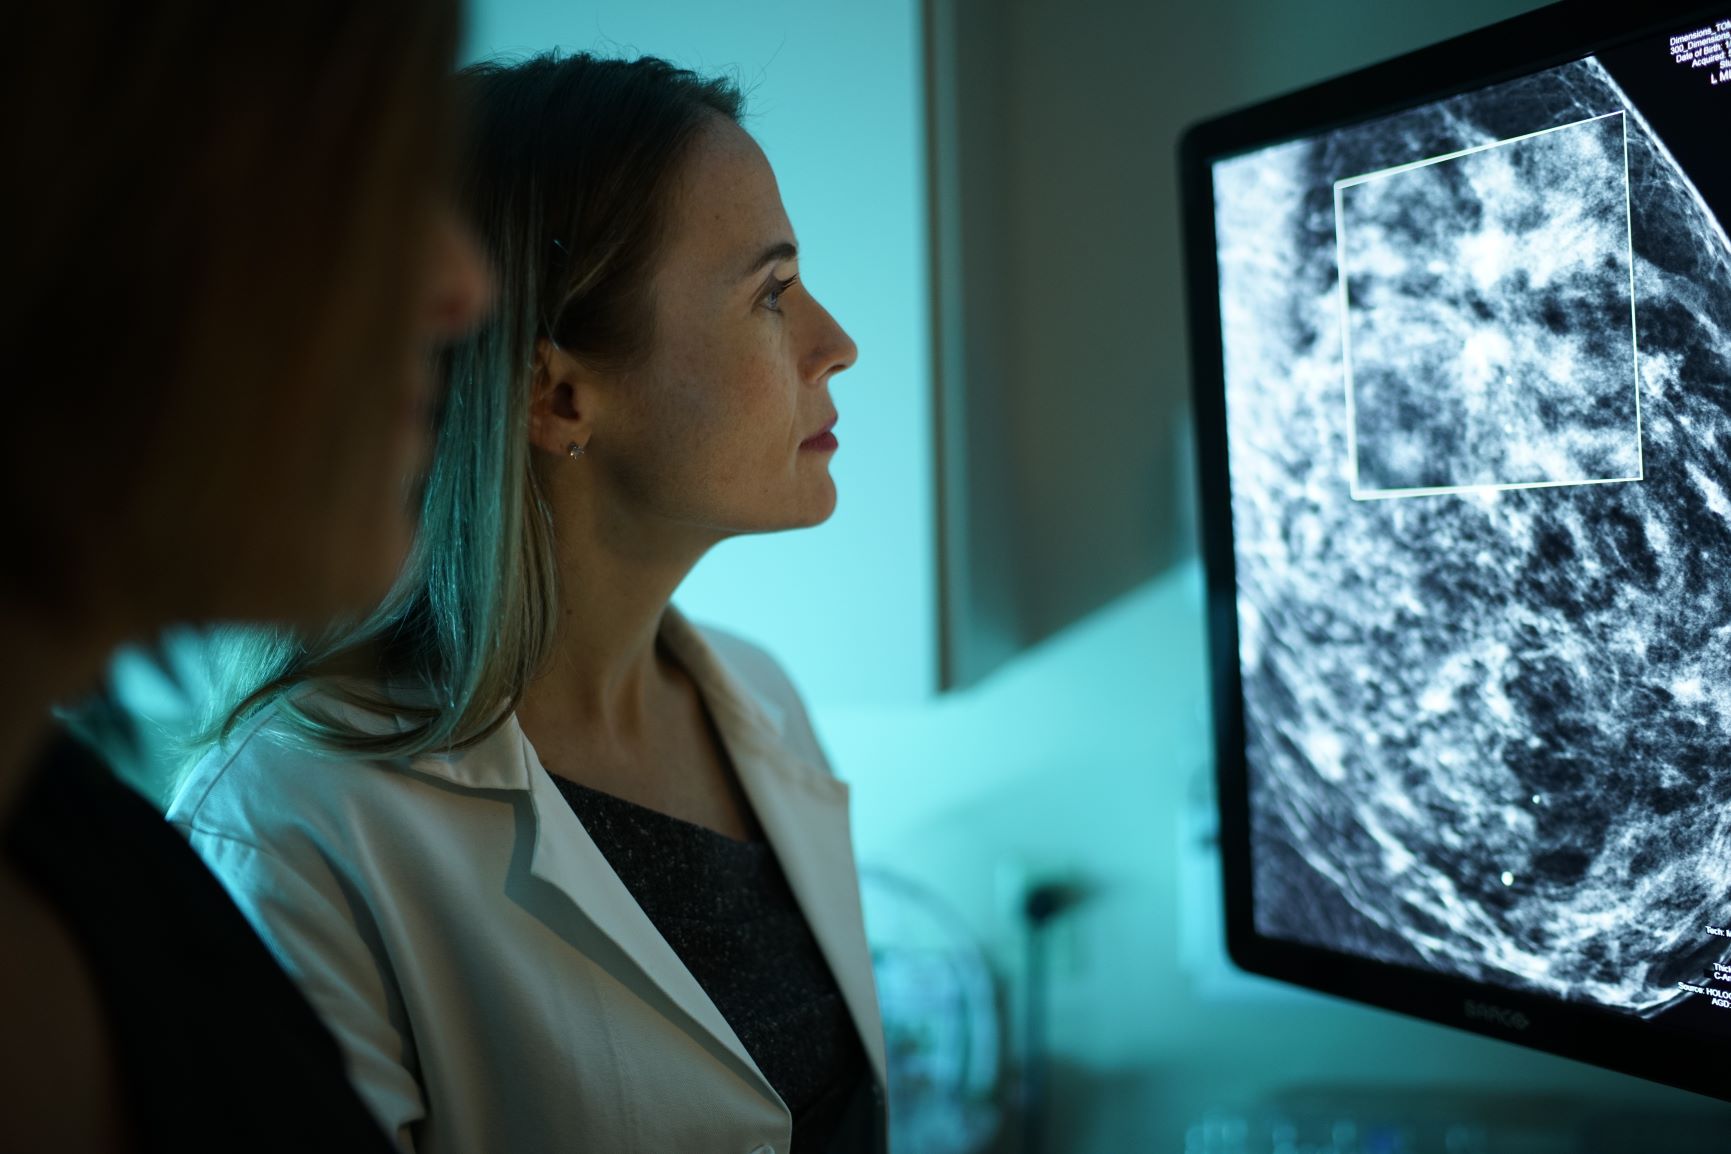 Inspira doctors analyzing a Mammogram